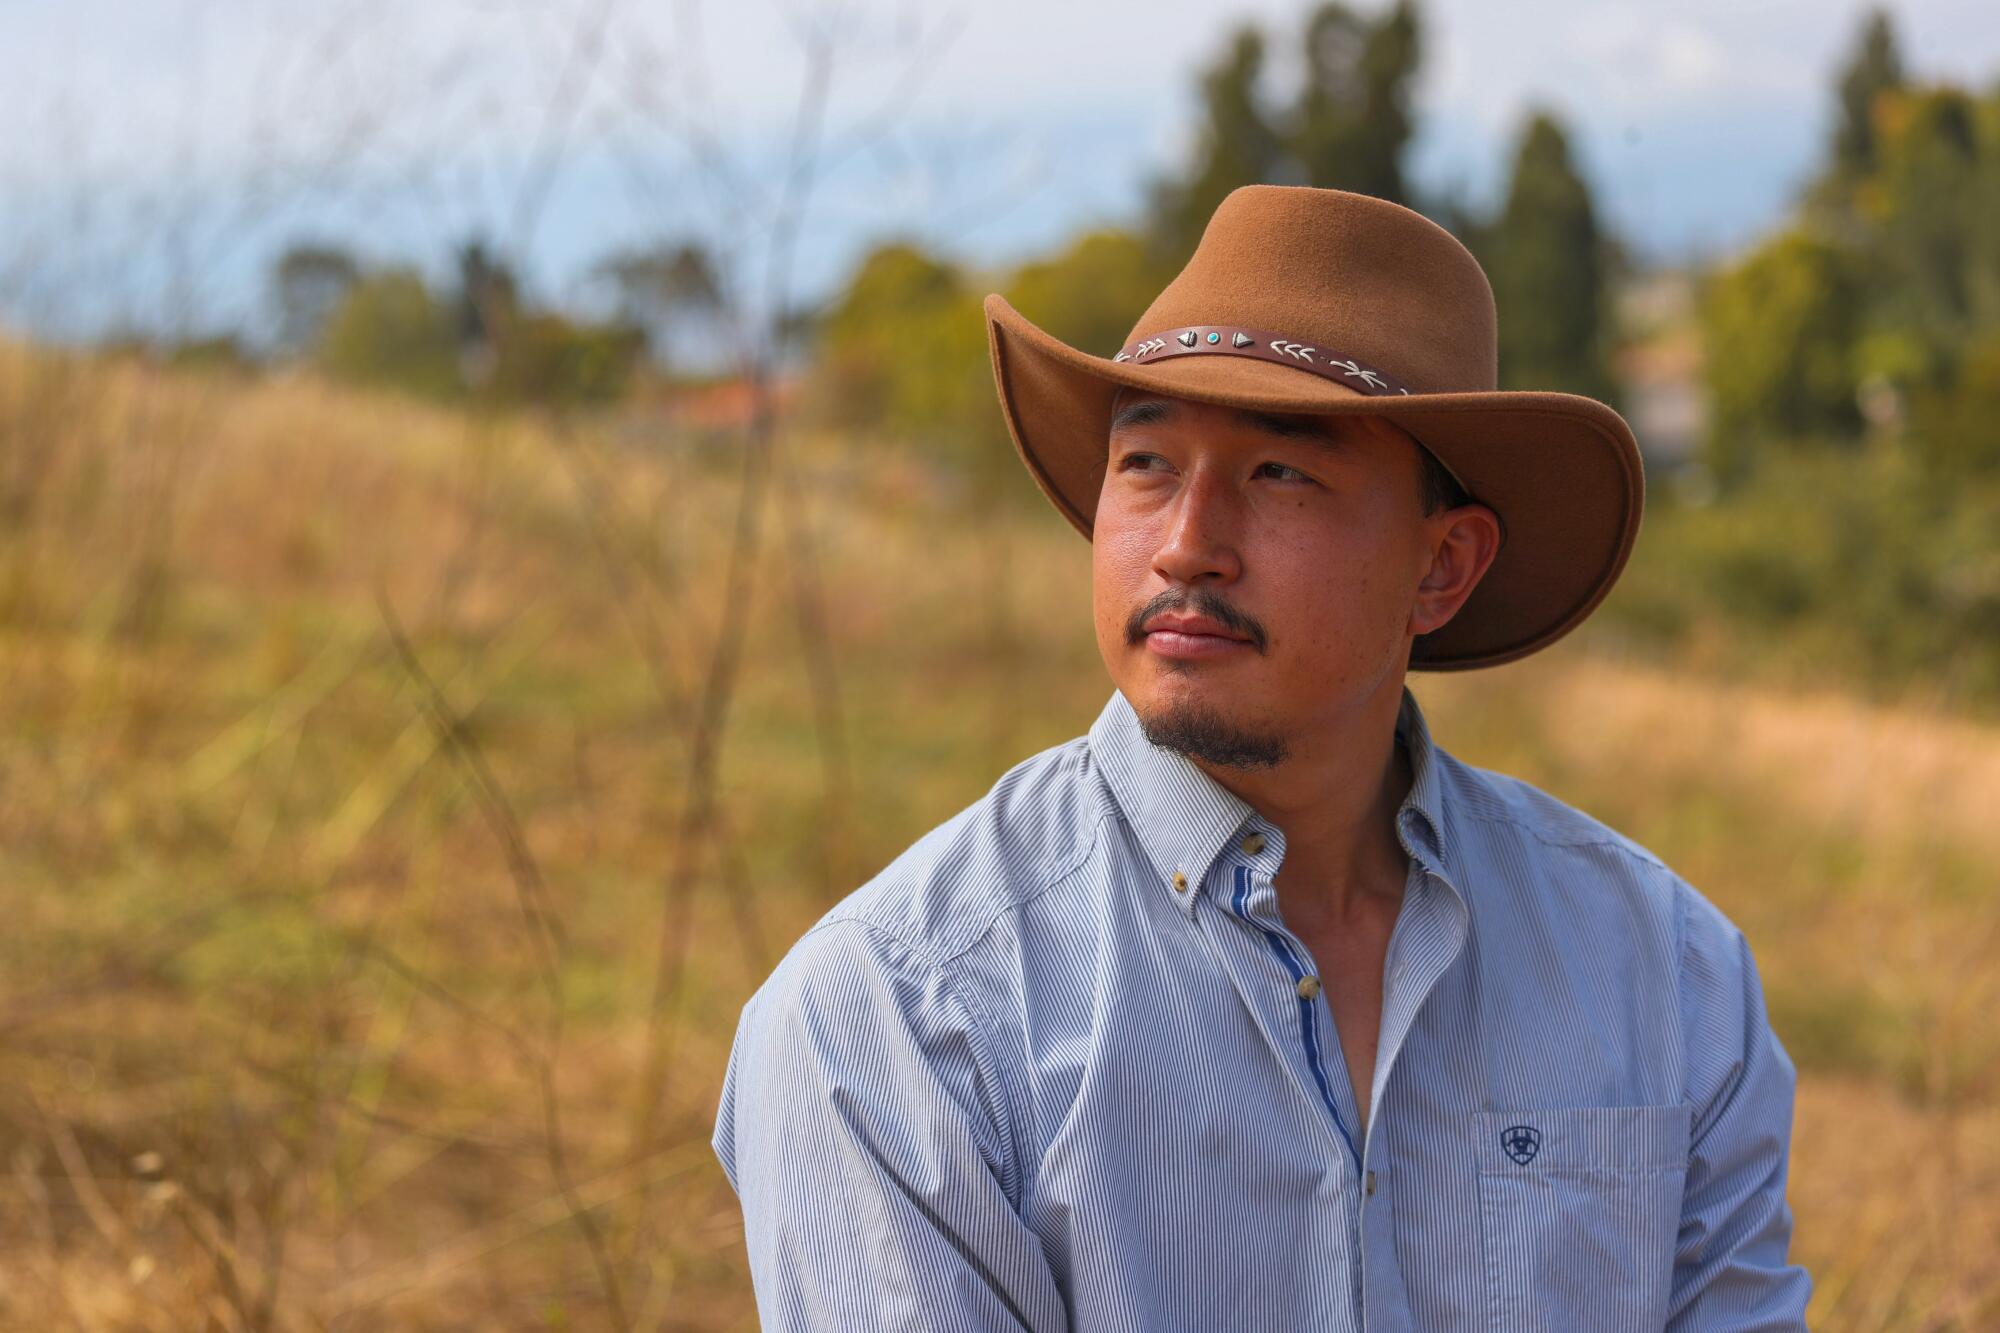 Goat herder Michael Choi wearing a cowboy hat